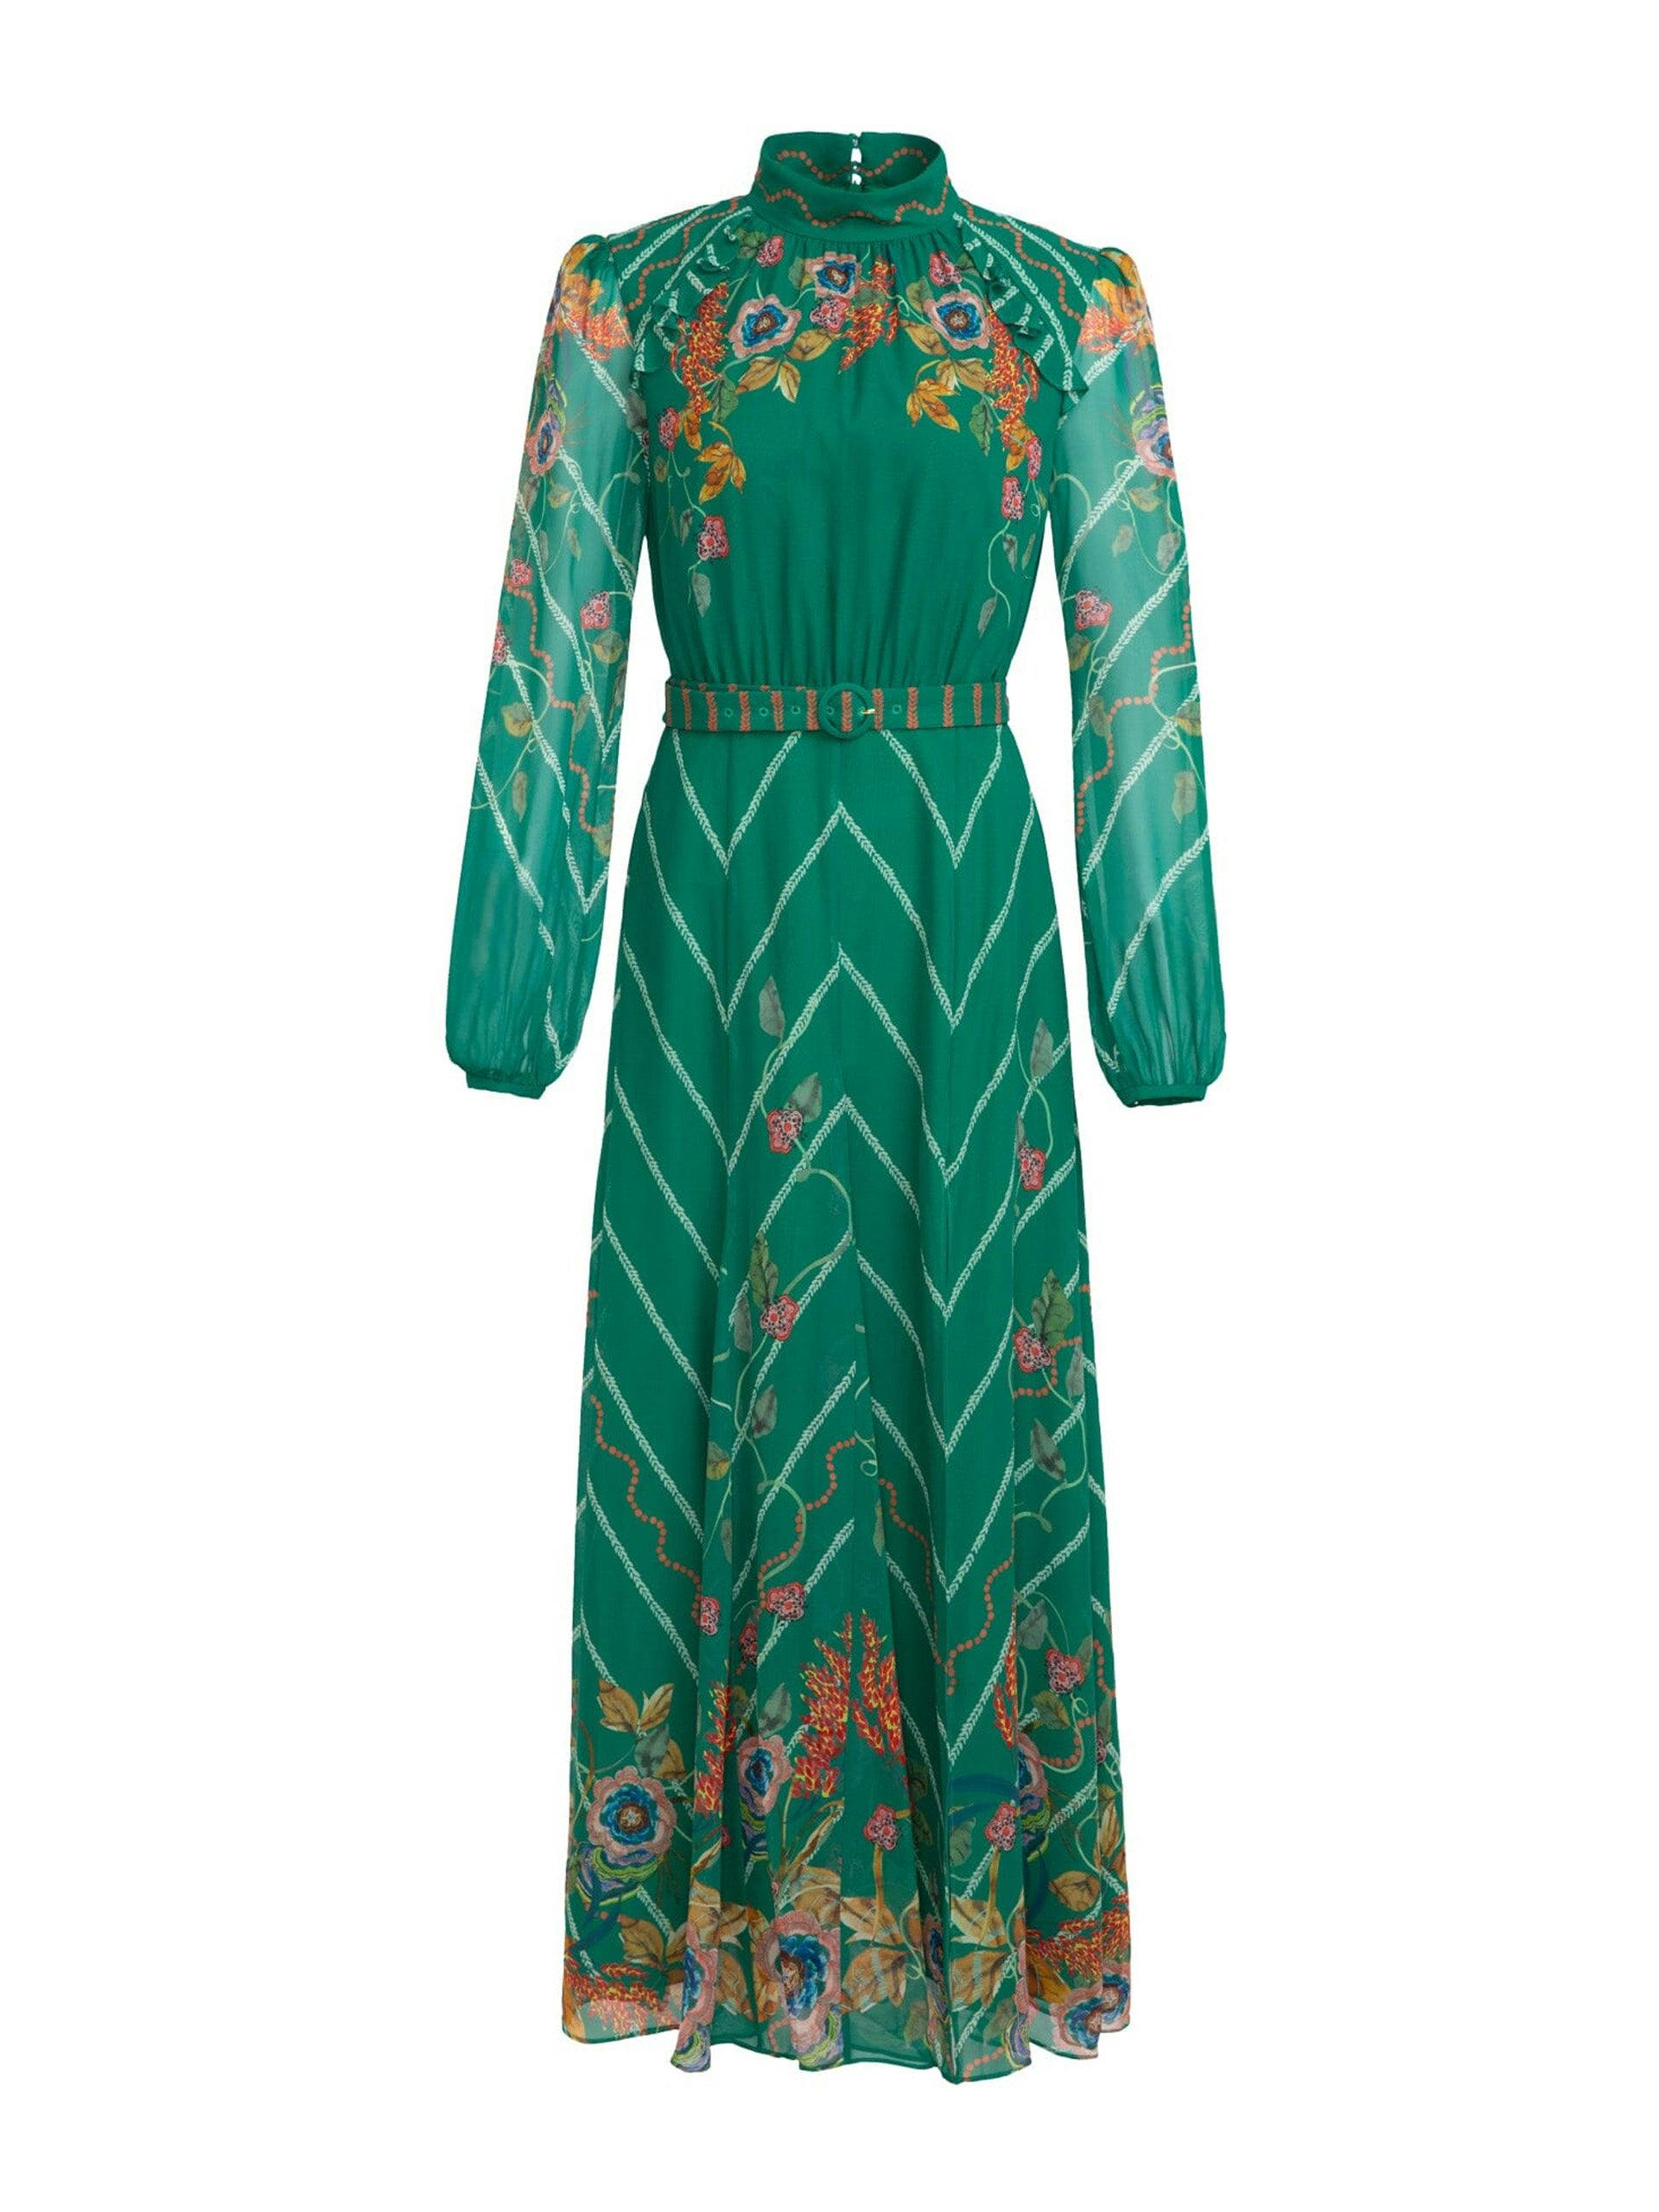 Jacqui B dress in emerald barley